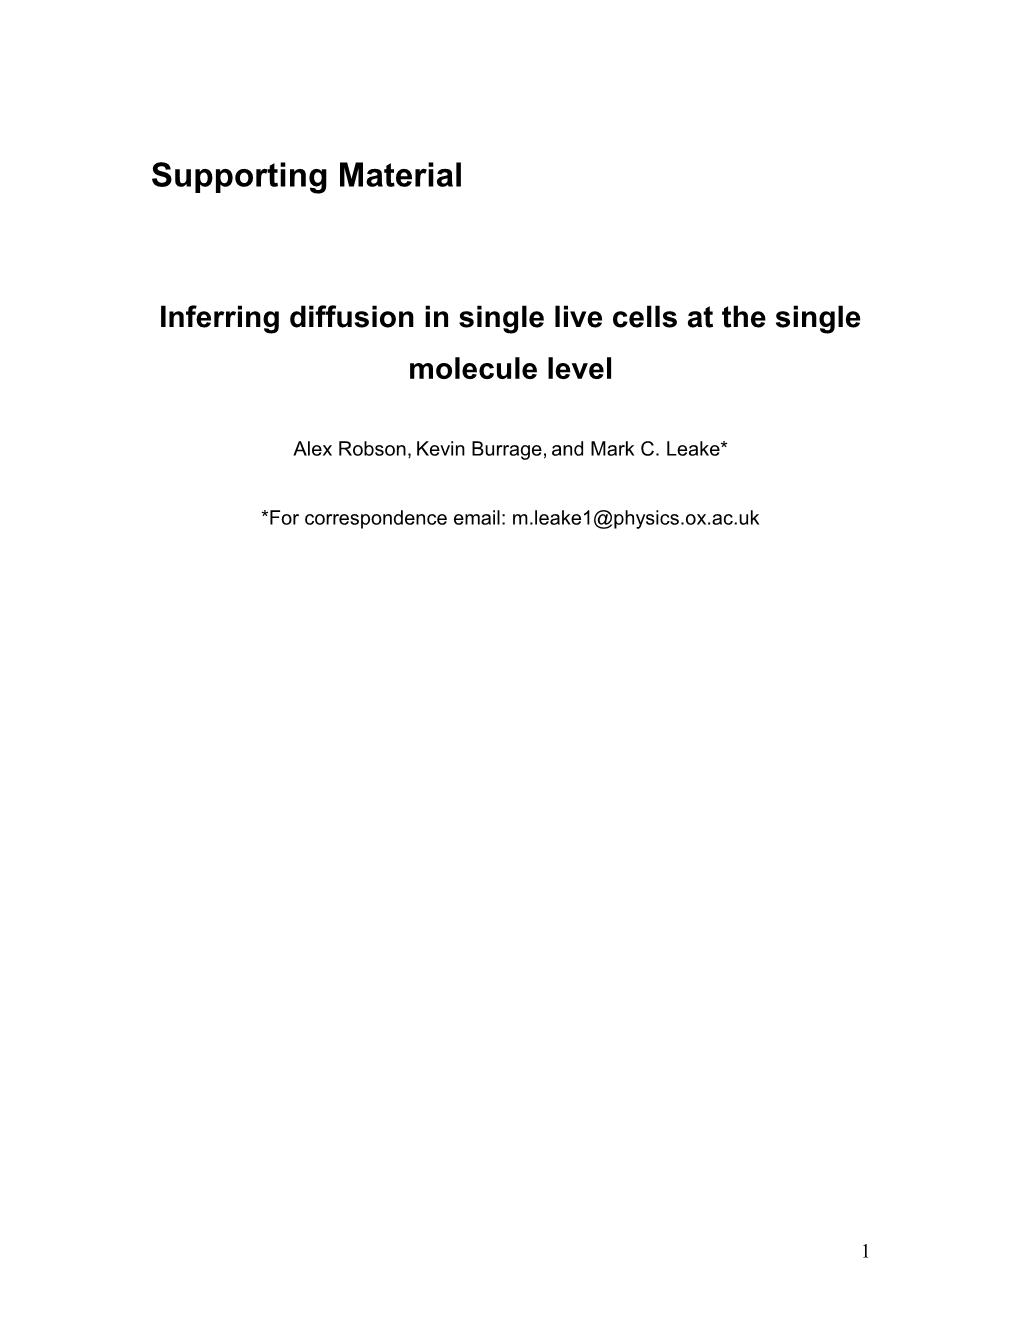 Inferring Diffusionin Single Live Cellsat the Single Molecule Level